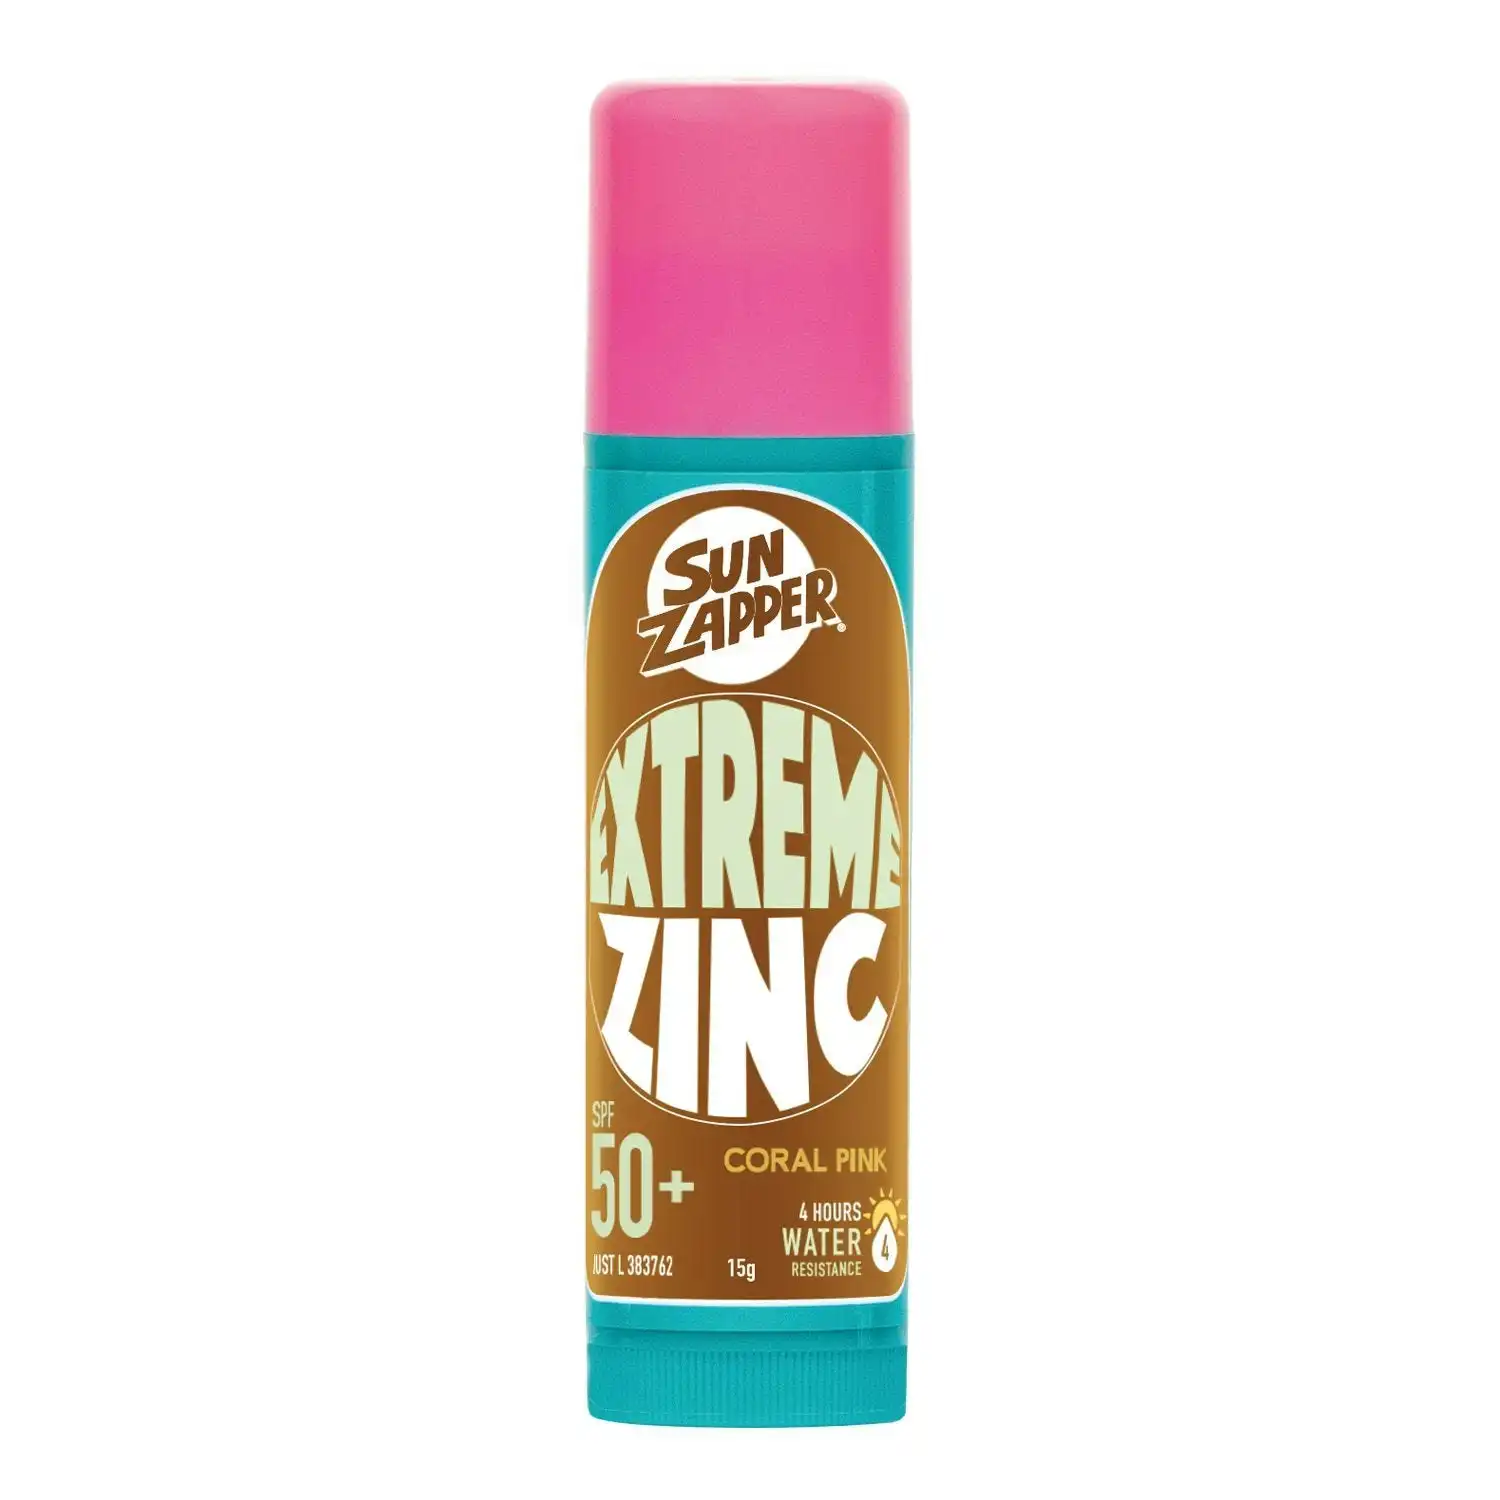 Sun Zapper Extreme Zinc Stick 15g Coral Pink